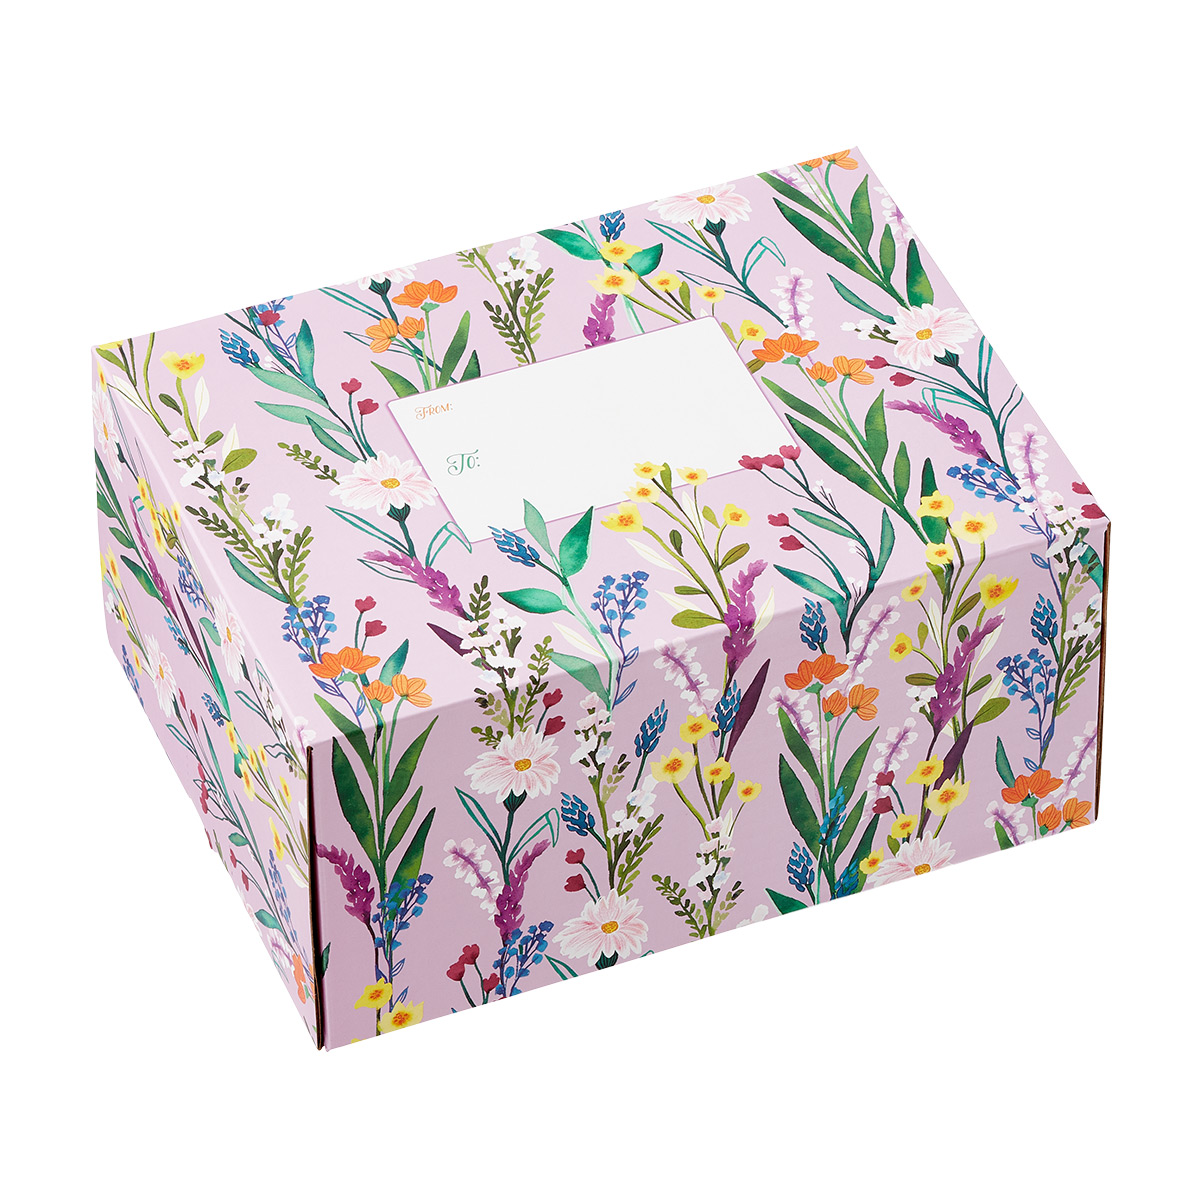 12" x 9" x 6" h Shipping Box Floral